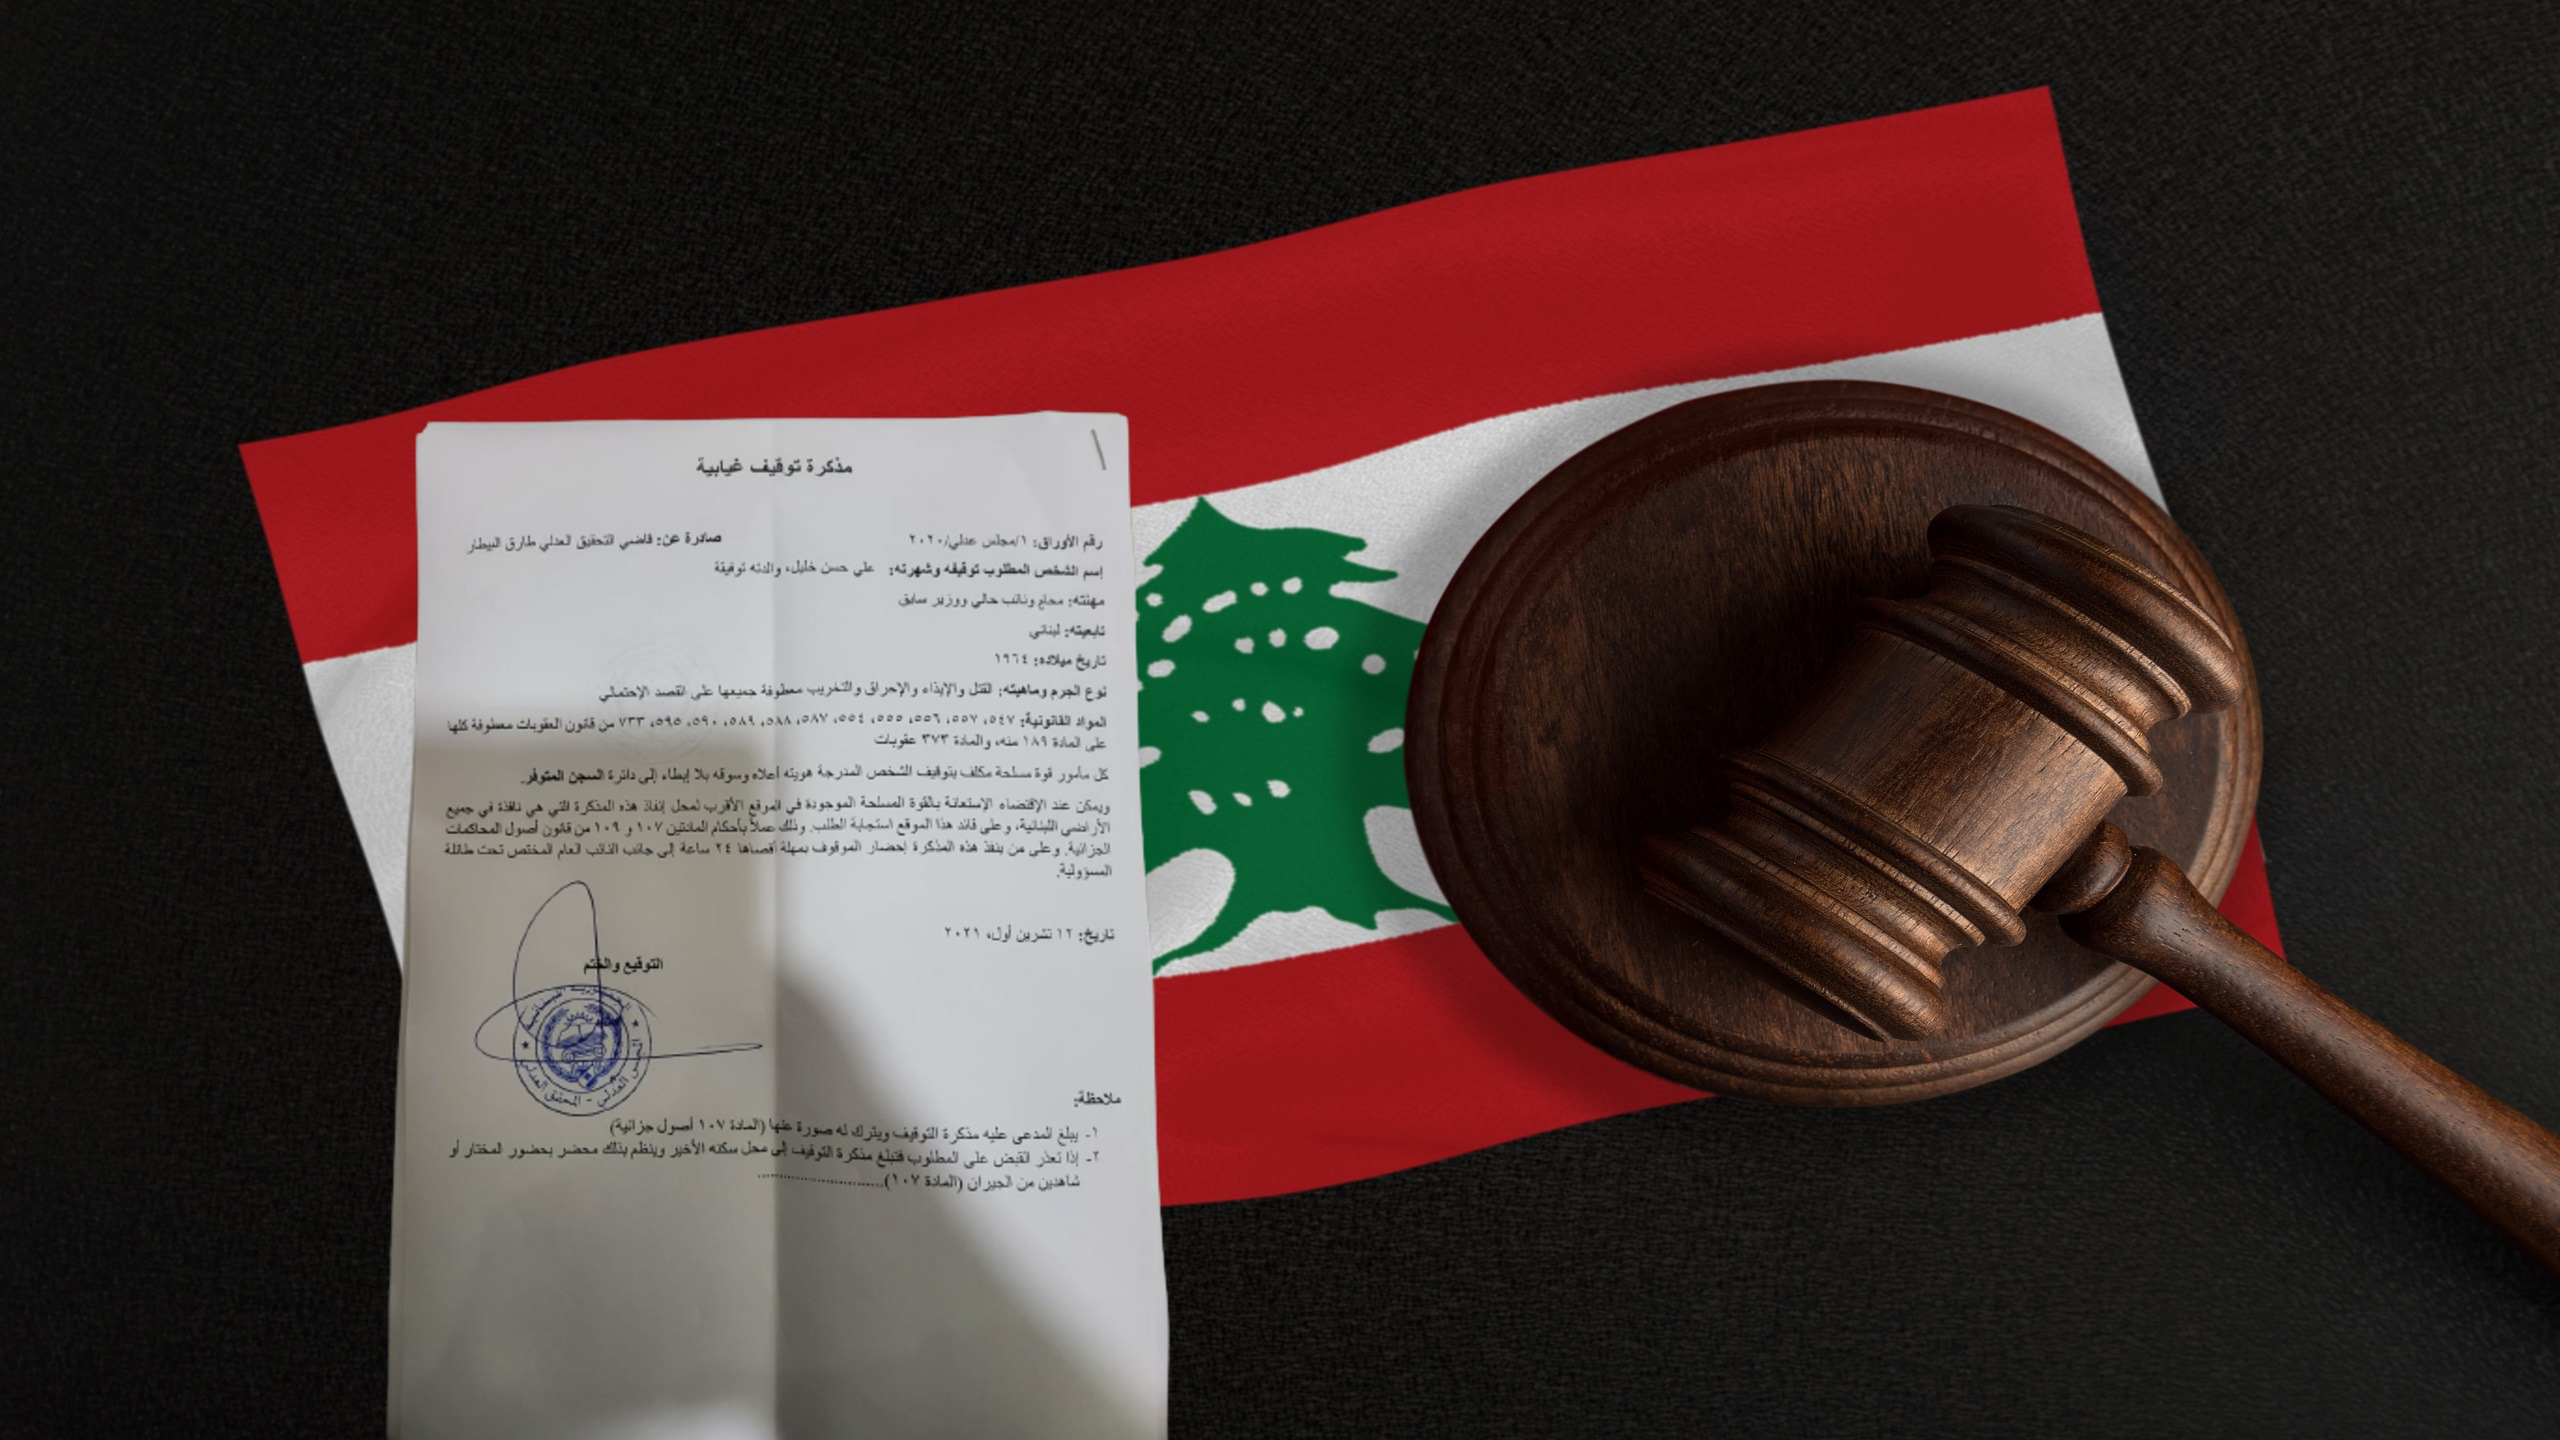 Judge in Beirut Blast Probe Issues Warrant for Arrest of Ex-Finance Chief